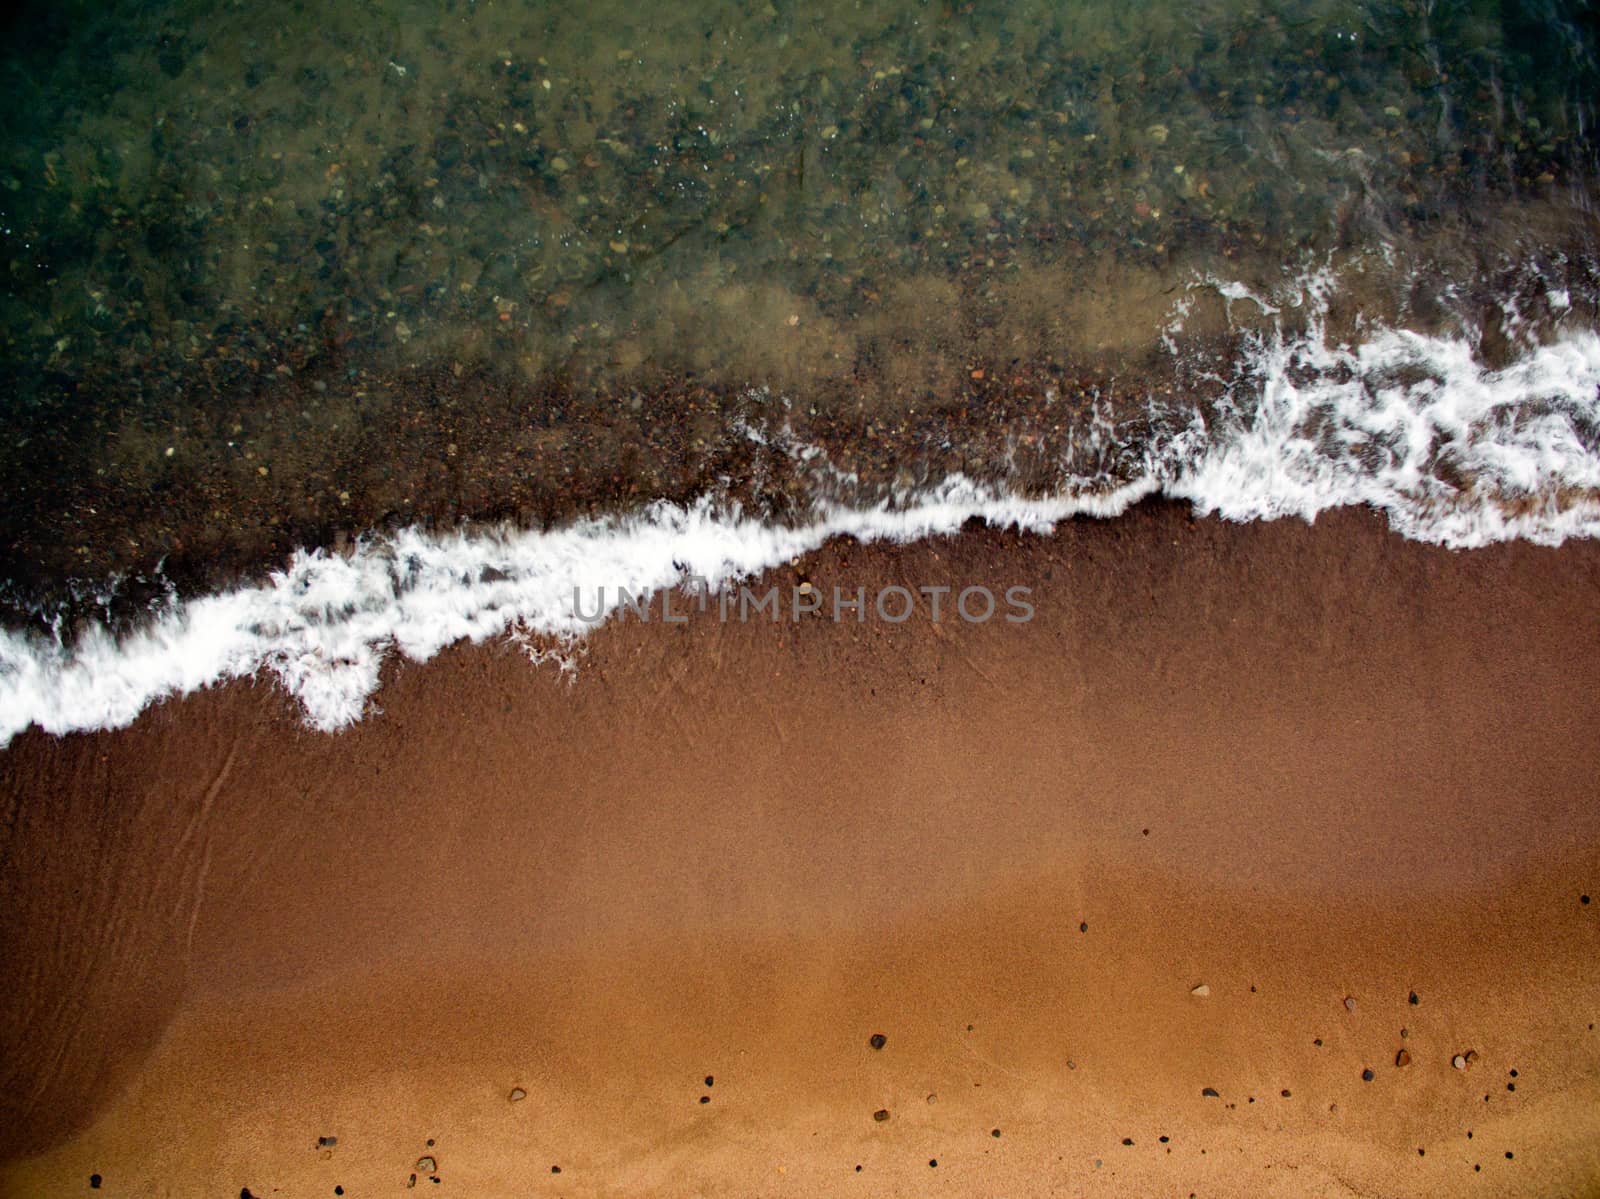 Waters edge on the beach